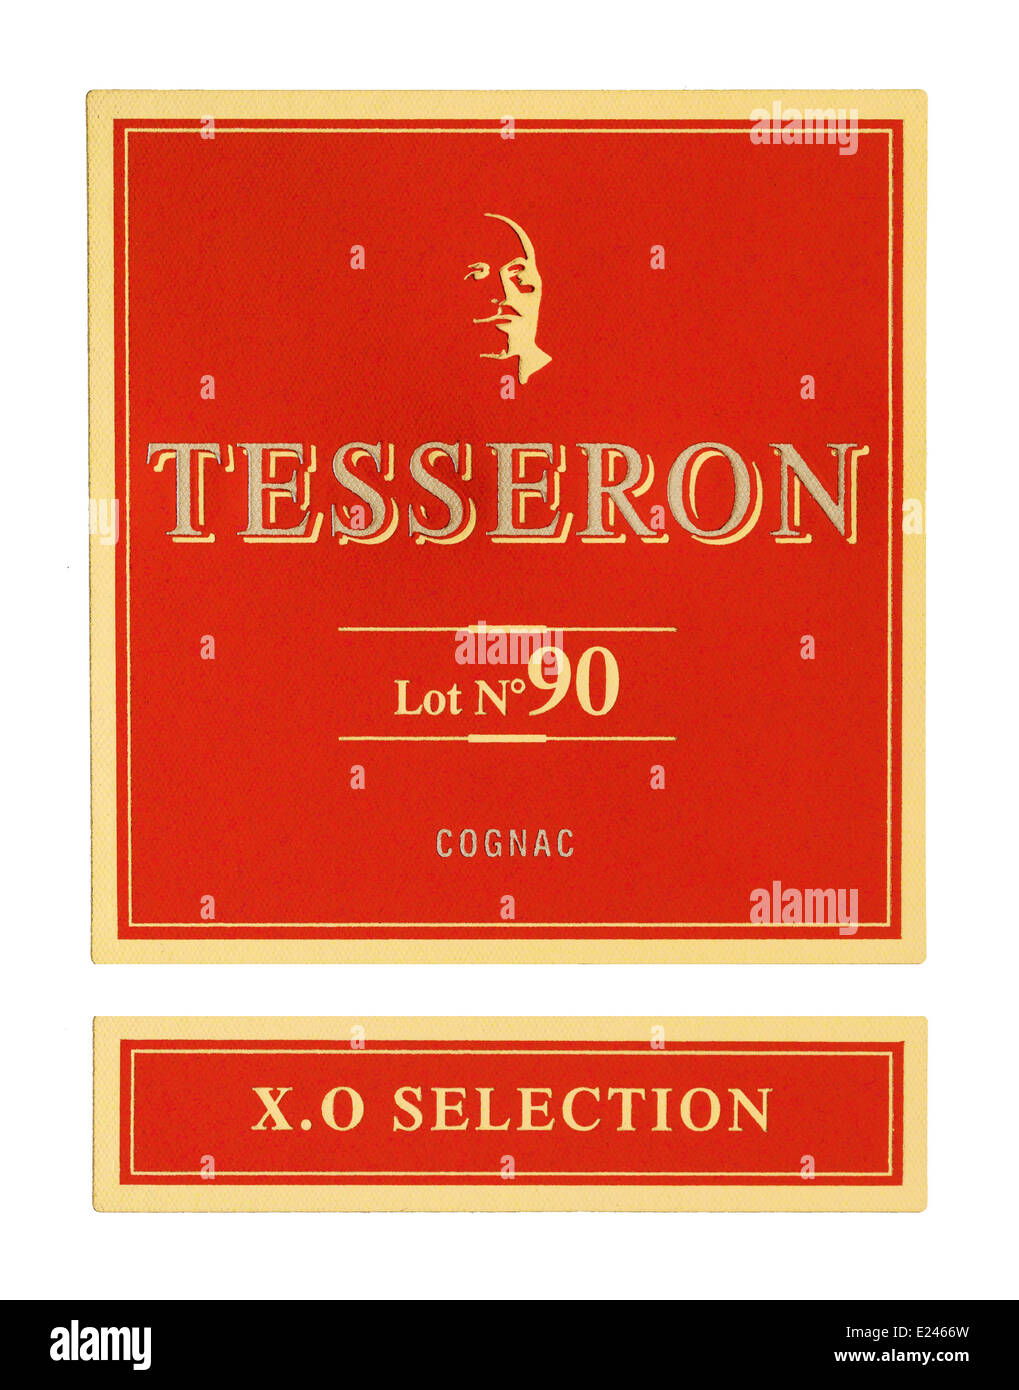 Cognac Tesseron, Lot 90 X.O selection bottle label Stock Photo